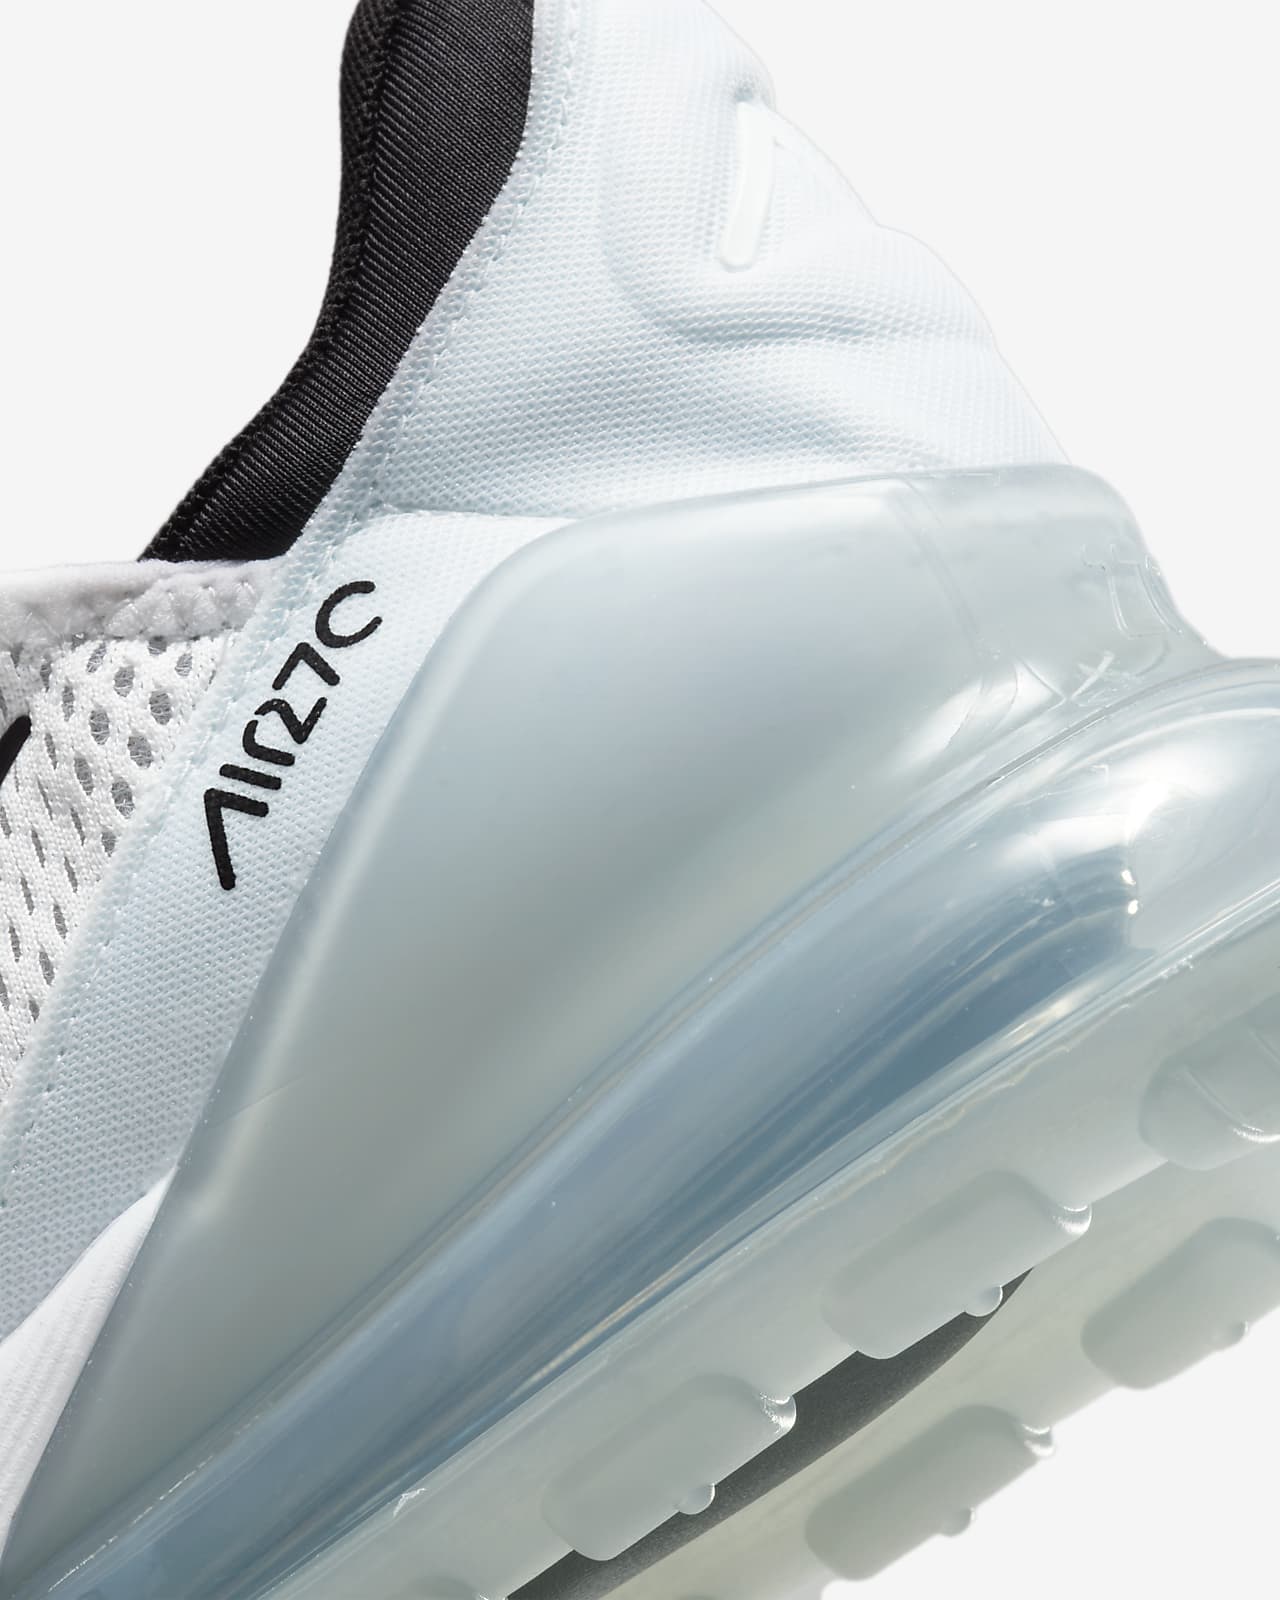 Nike Air Max 270 Men's Shoes. AU